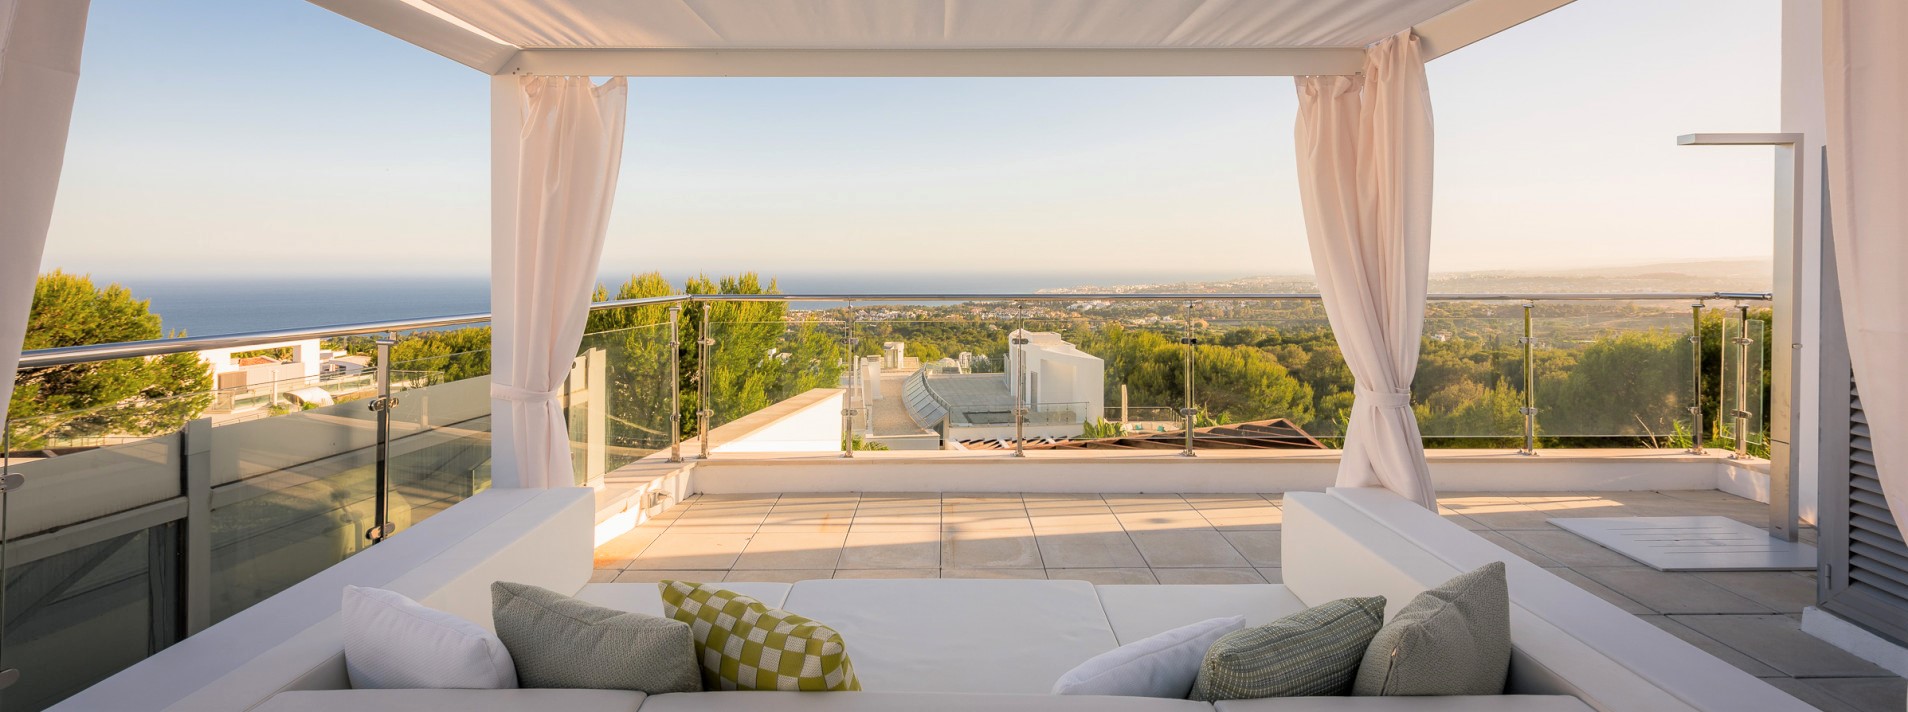 Villa for sale with views Marbella